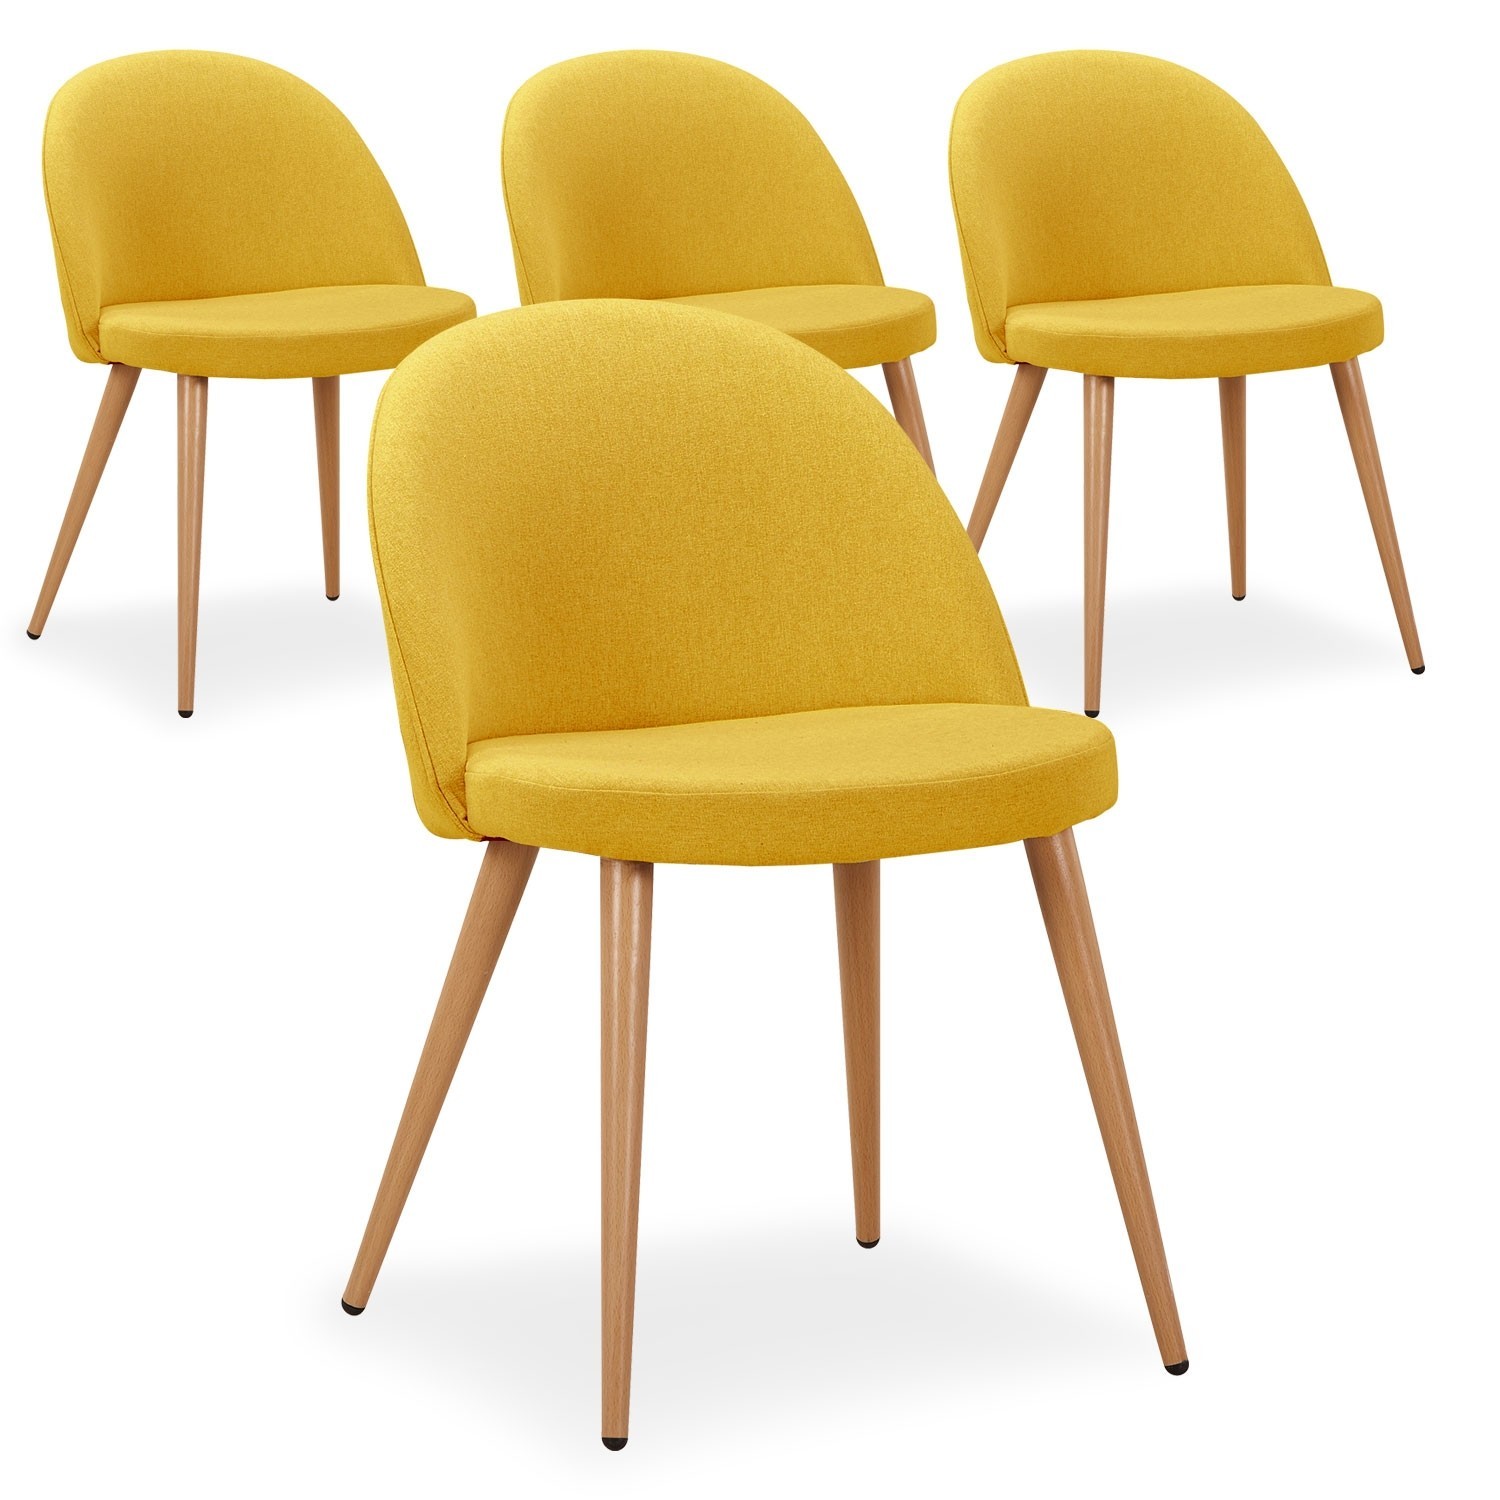 Chaise style scandinave jaune